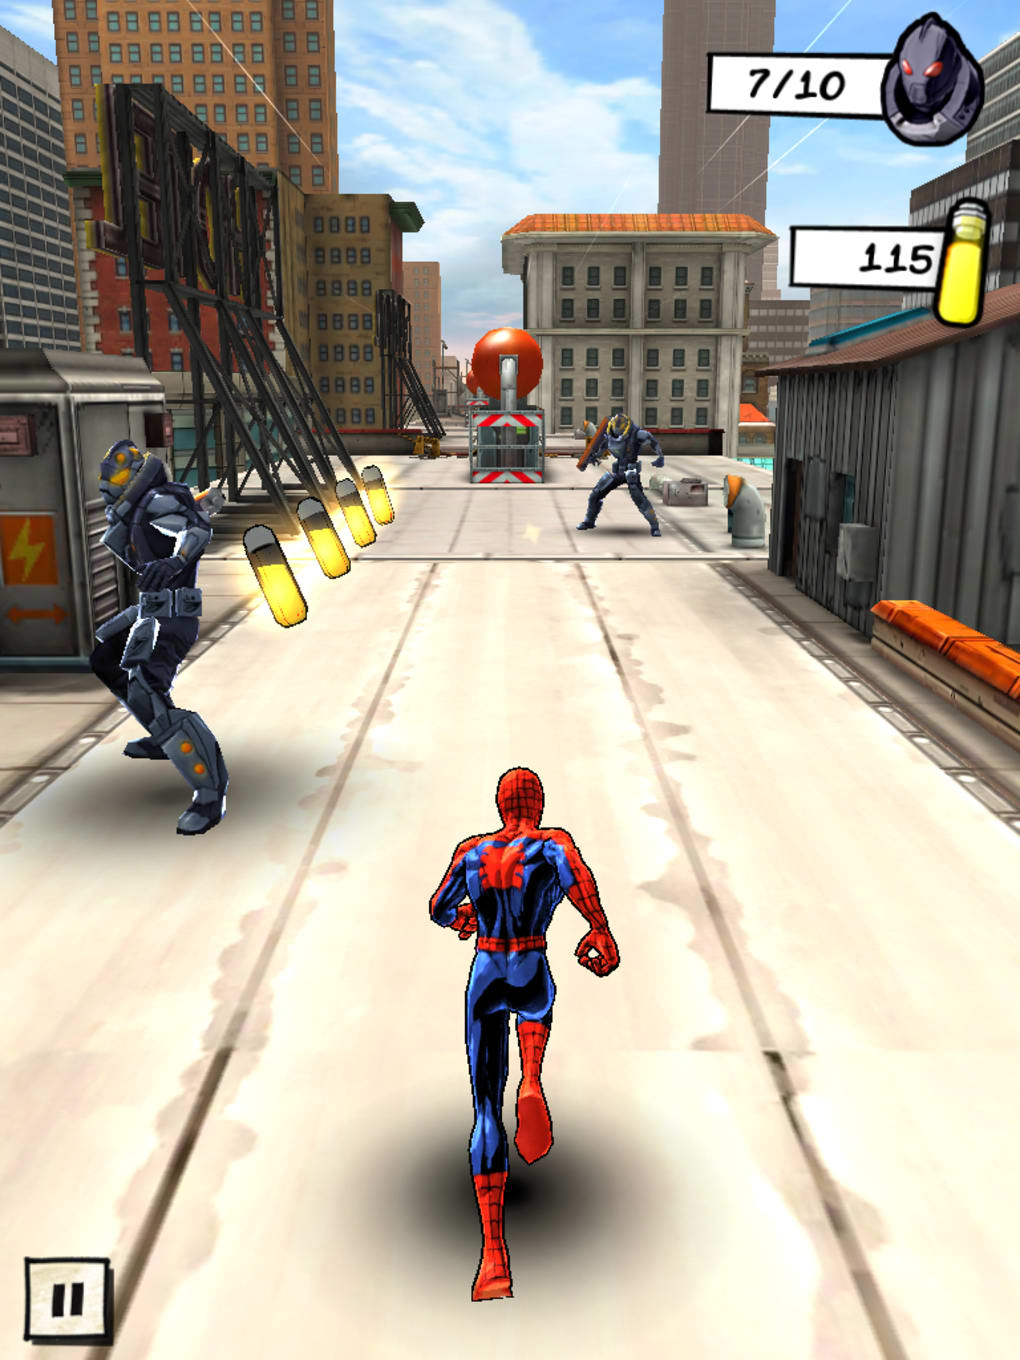 Gameloft anuncia Homem Aranha Unlimited para iOS, Android e WP - GameBlast